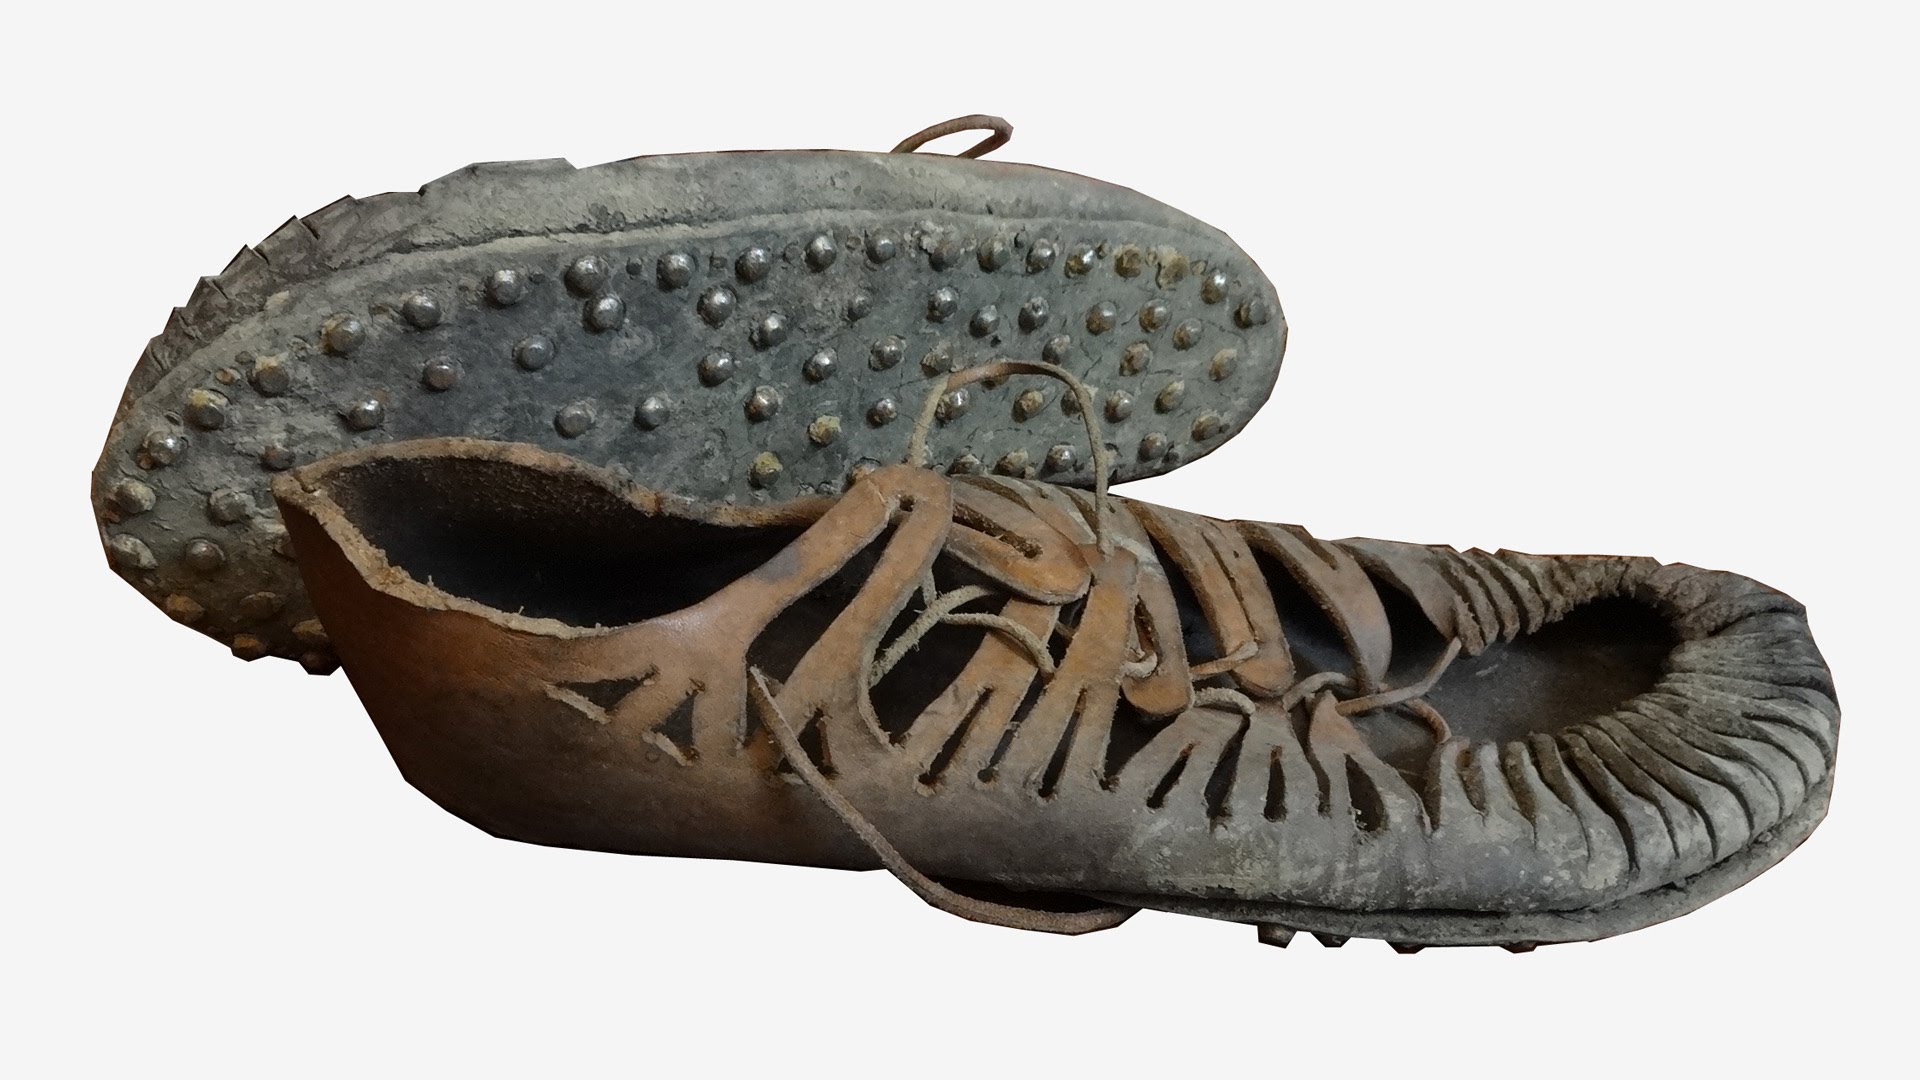 фото древняя греция обувь